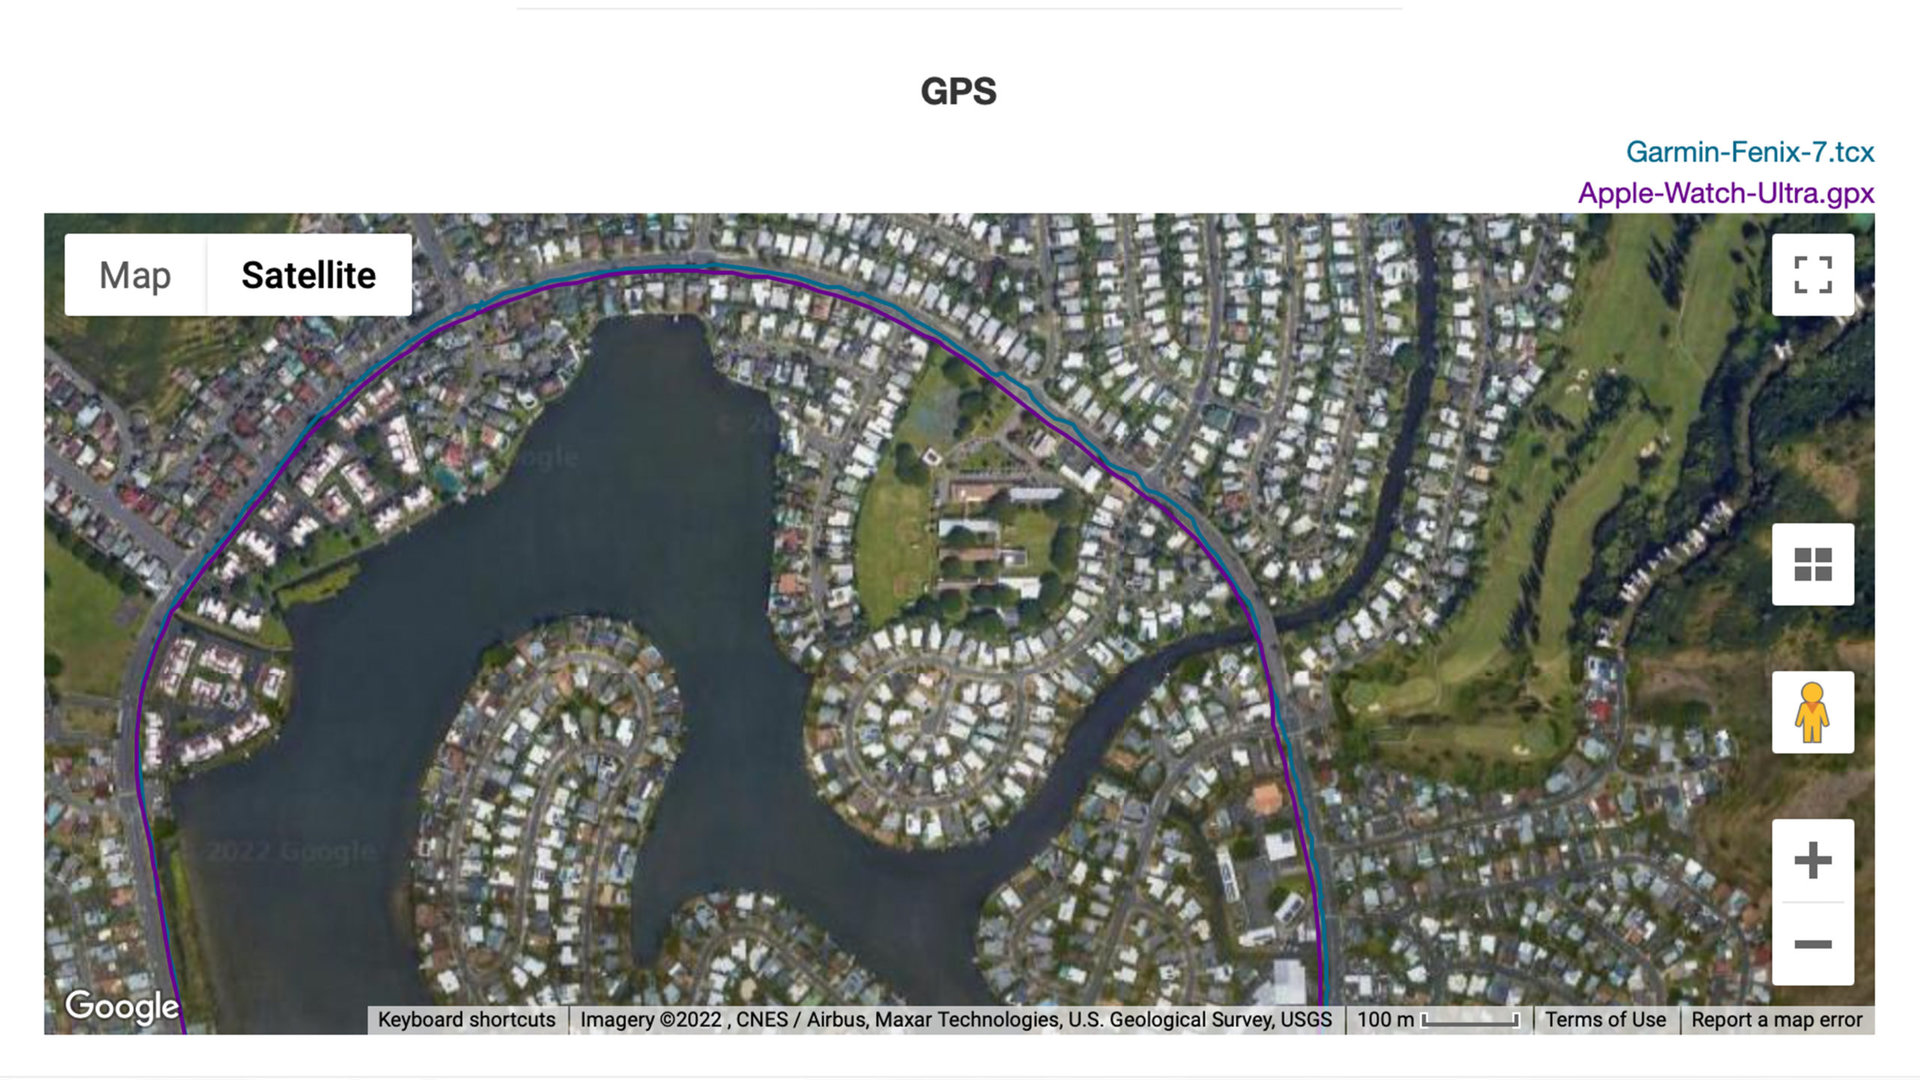 GPS data shows the Apple Watch Ultra outperforming a Garmin Fenix 7 on a loop run.